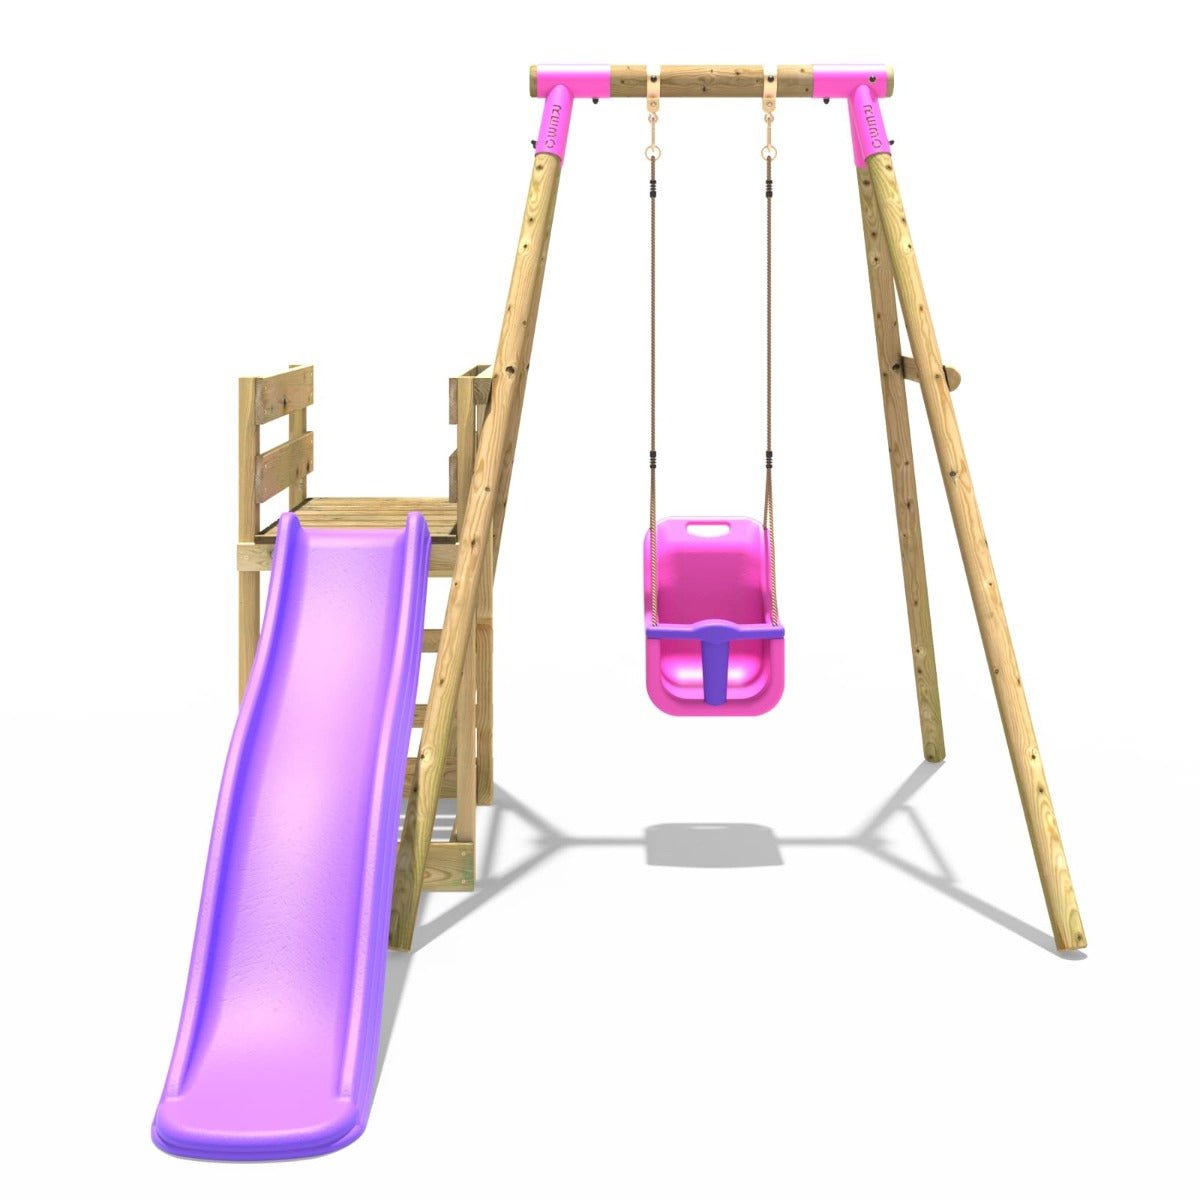 Rebo Wooden Swing Set plus Deck & Slide - Pluto Pink